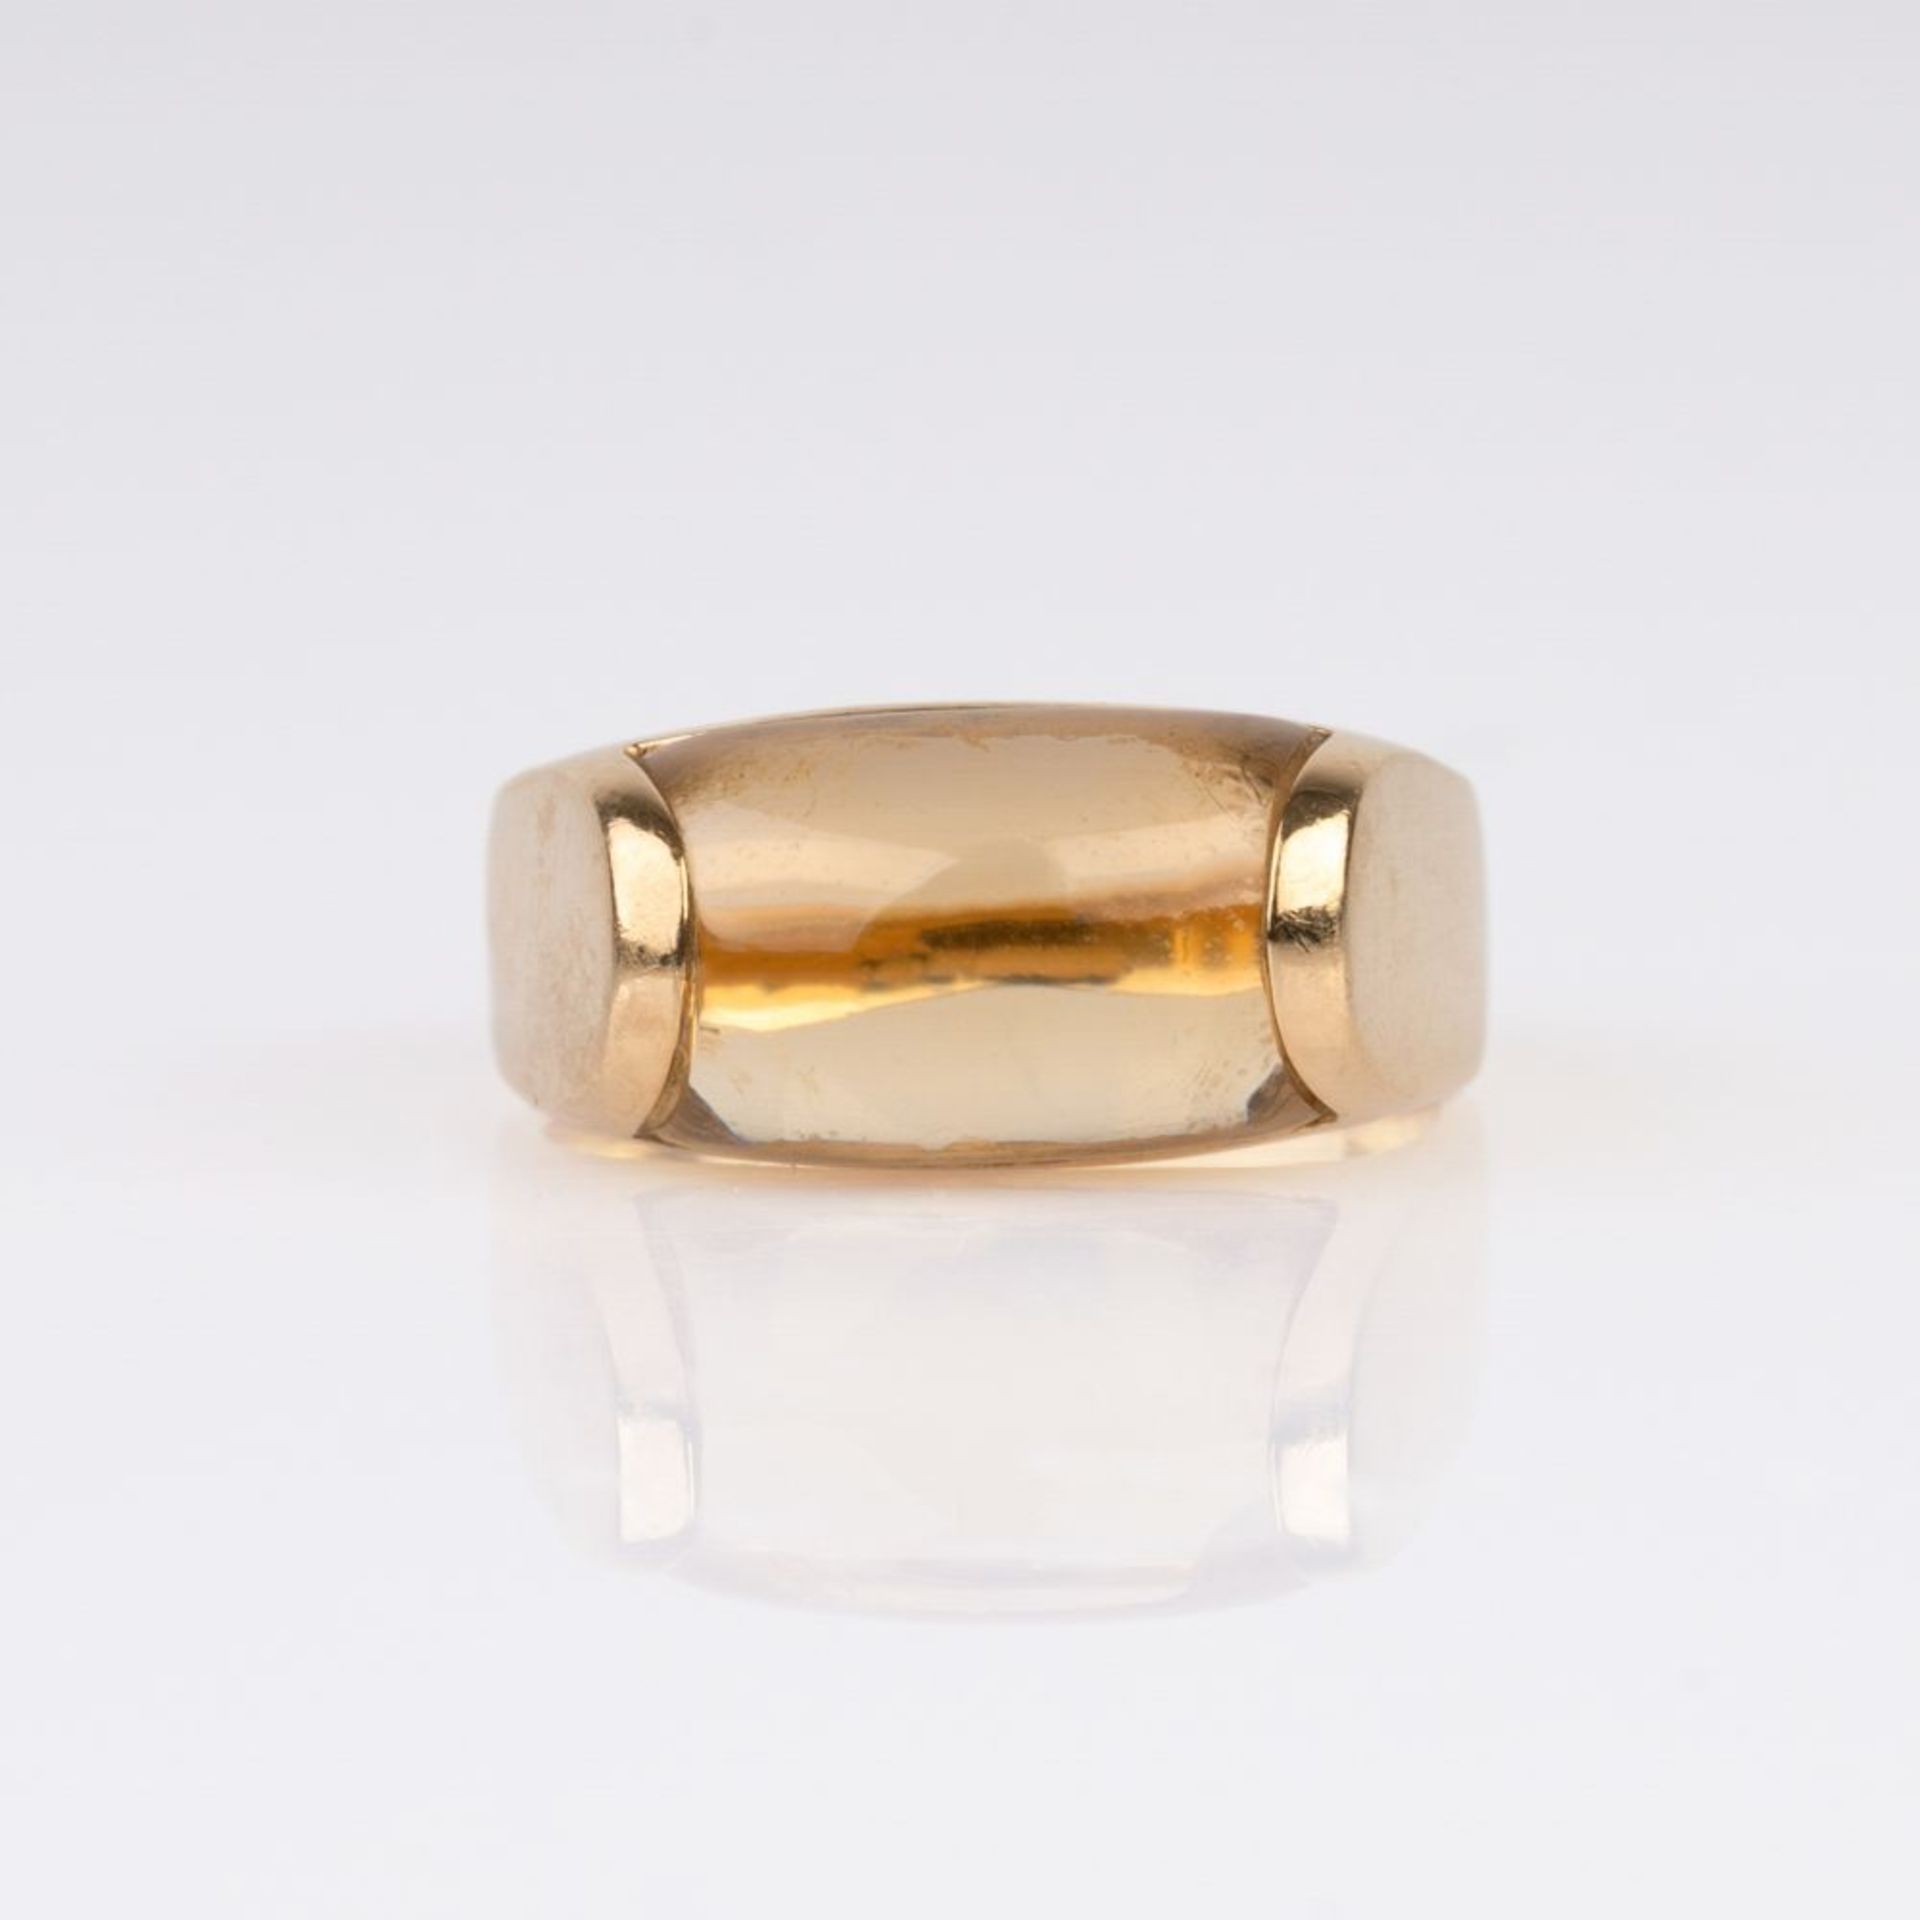 Bulgari. A Gold Ring with Citrine 'Tronchetto'.